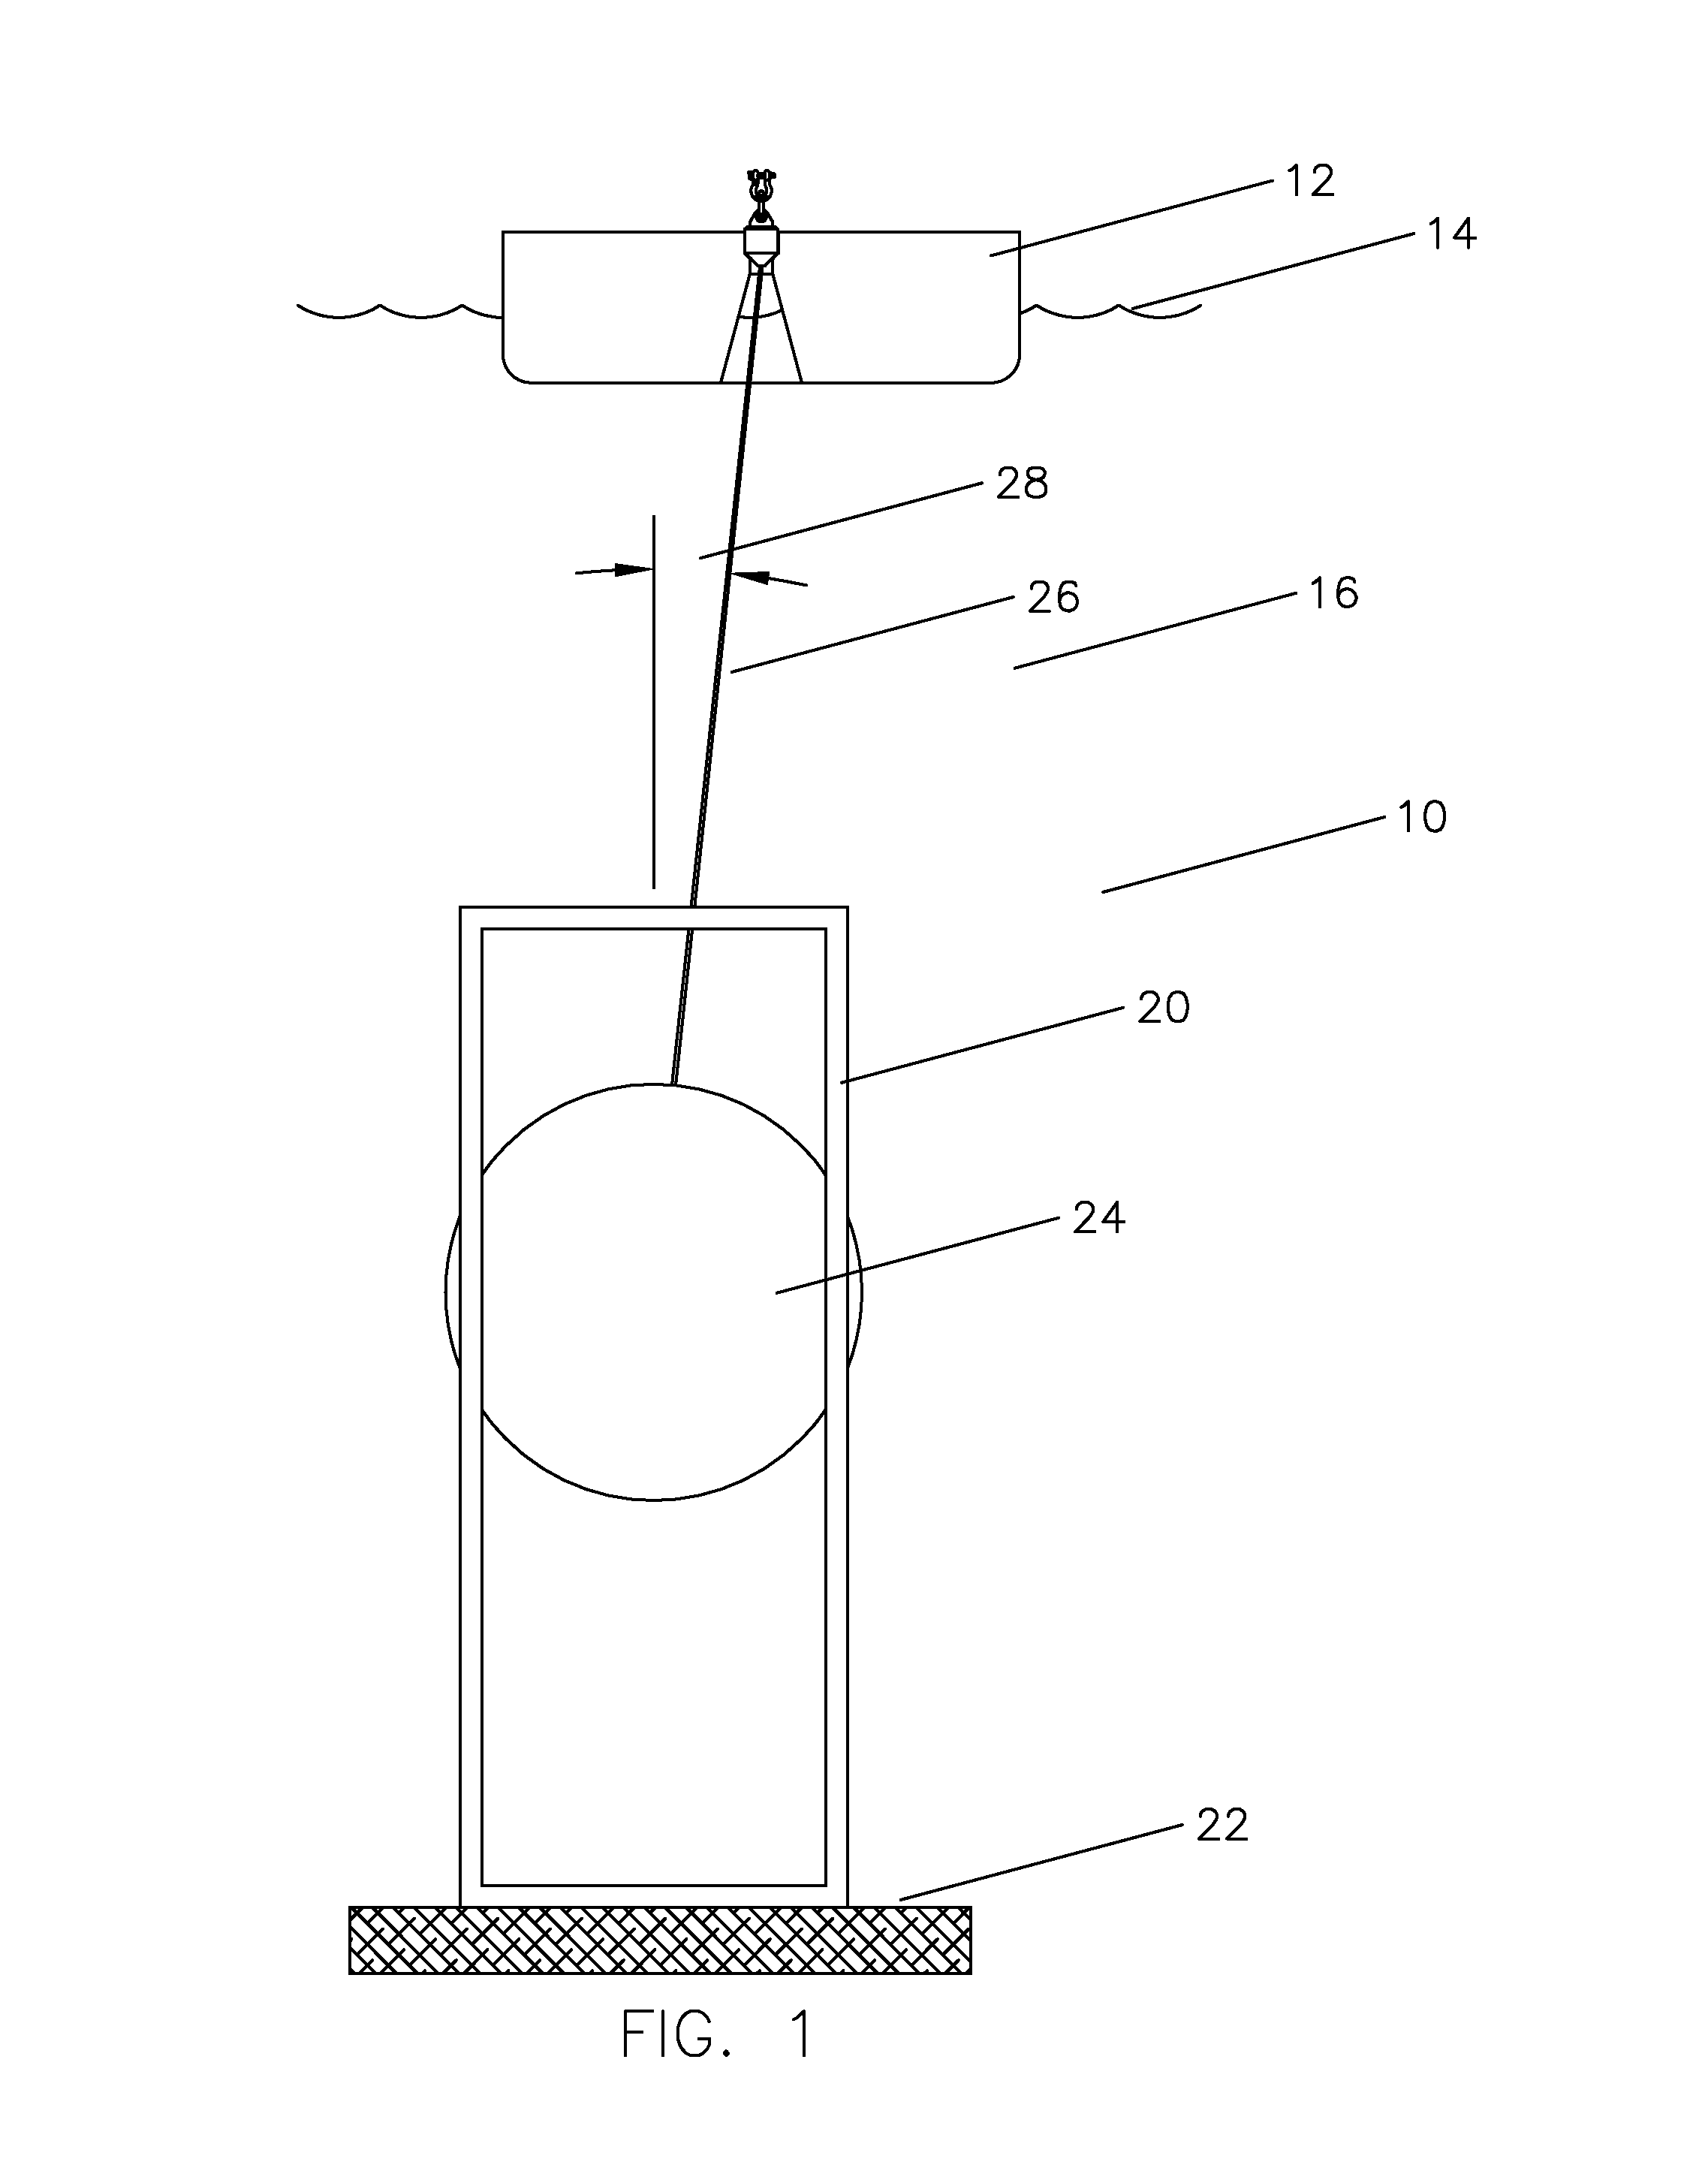 Method of Single Line Mooring